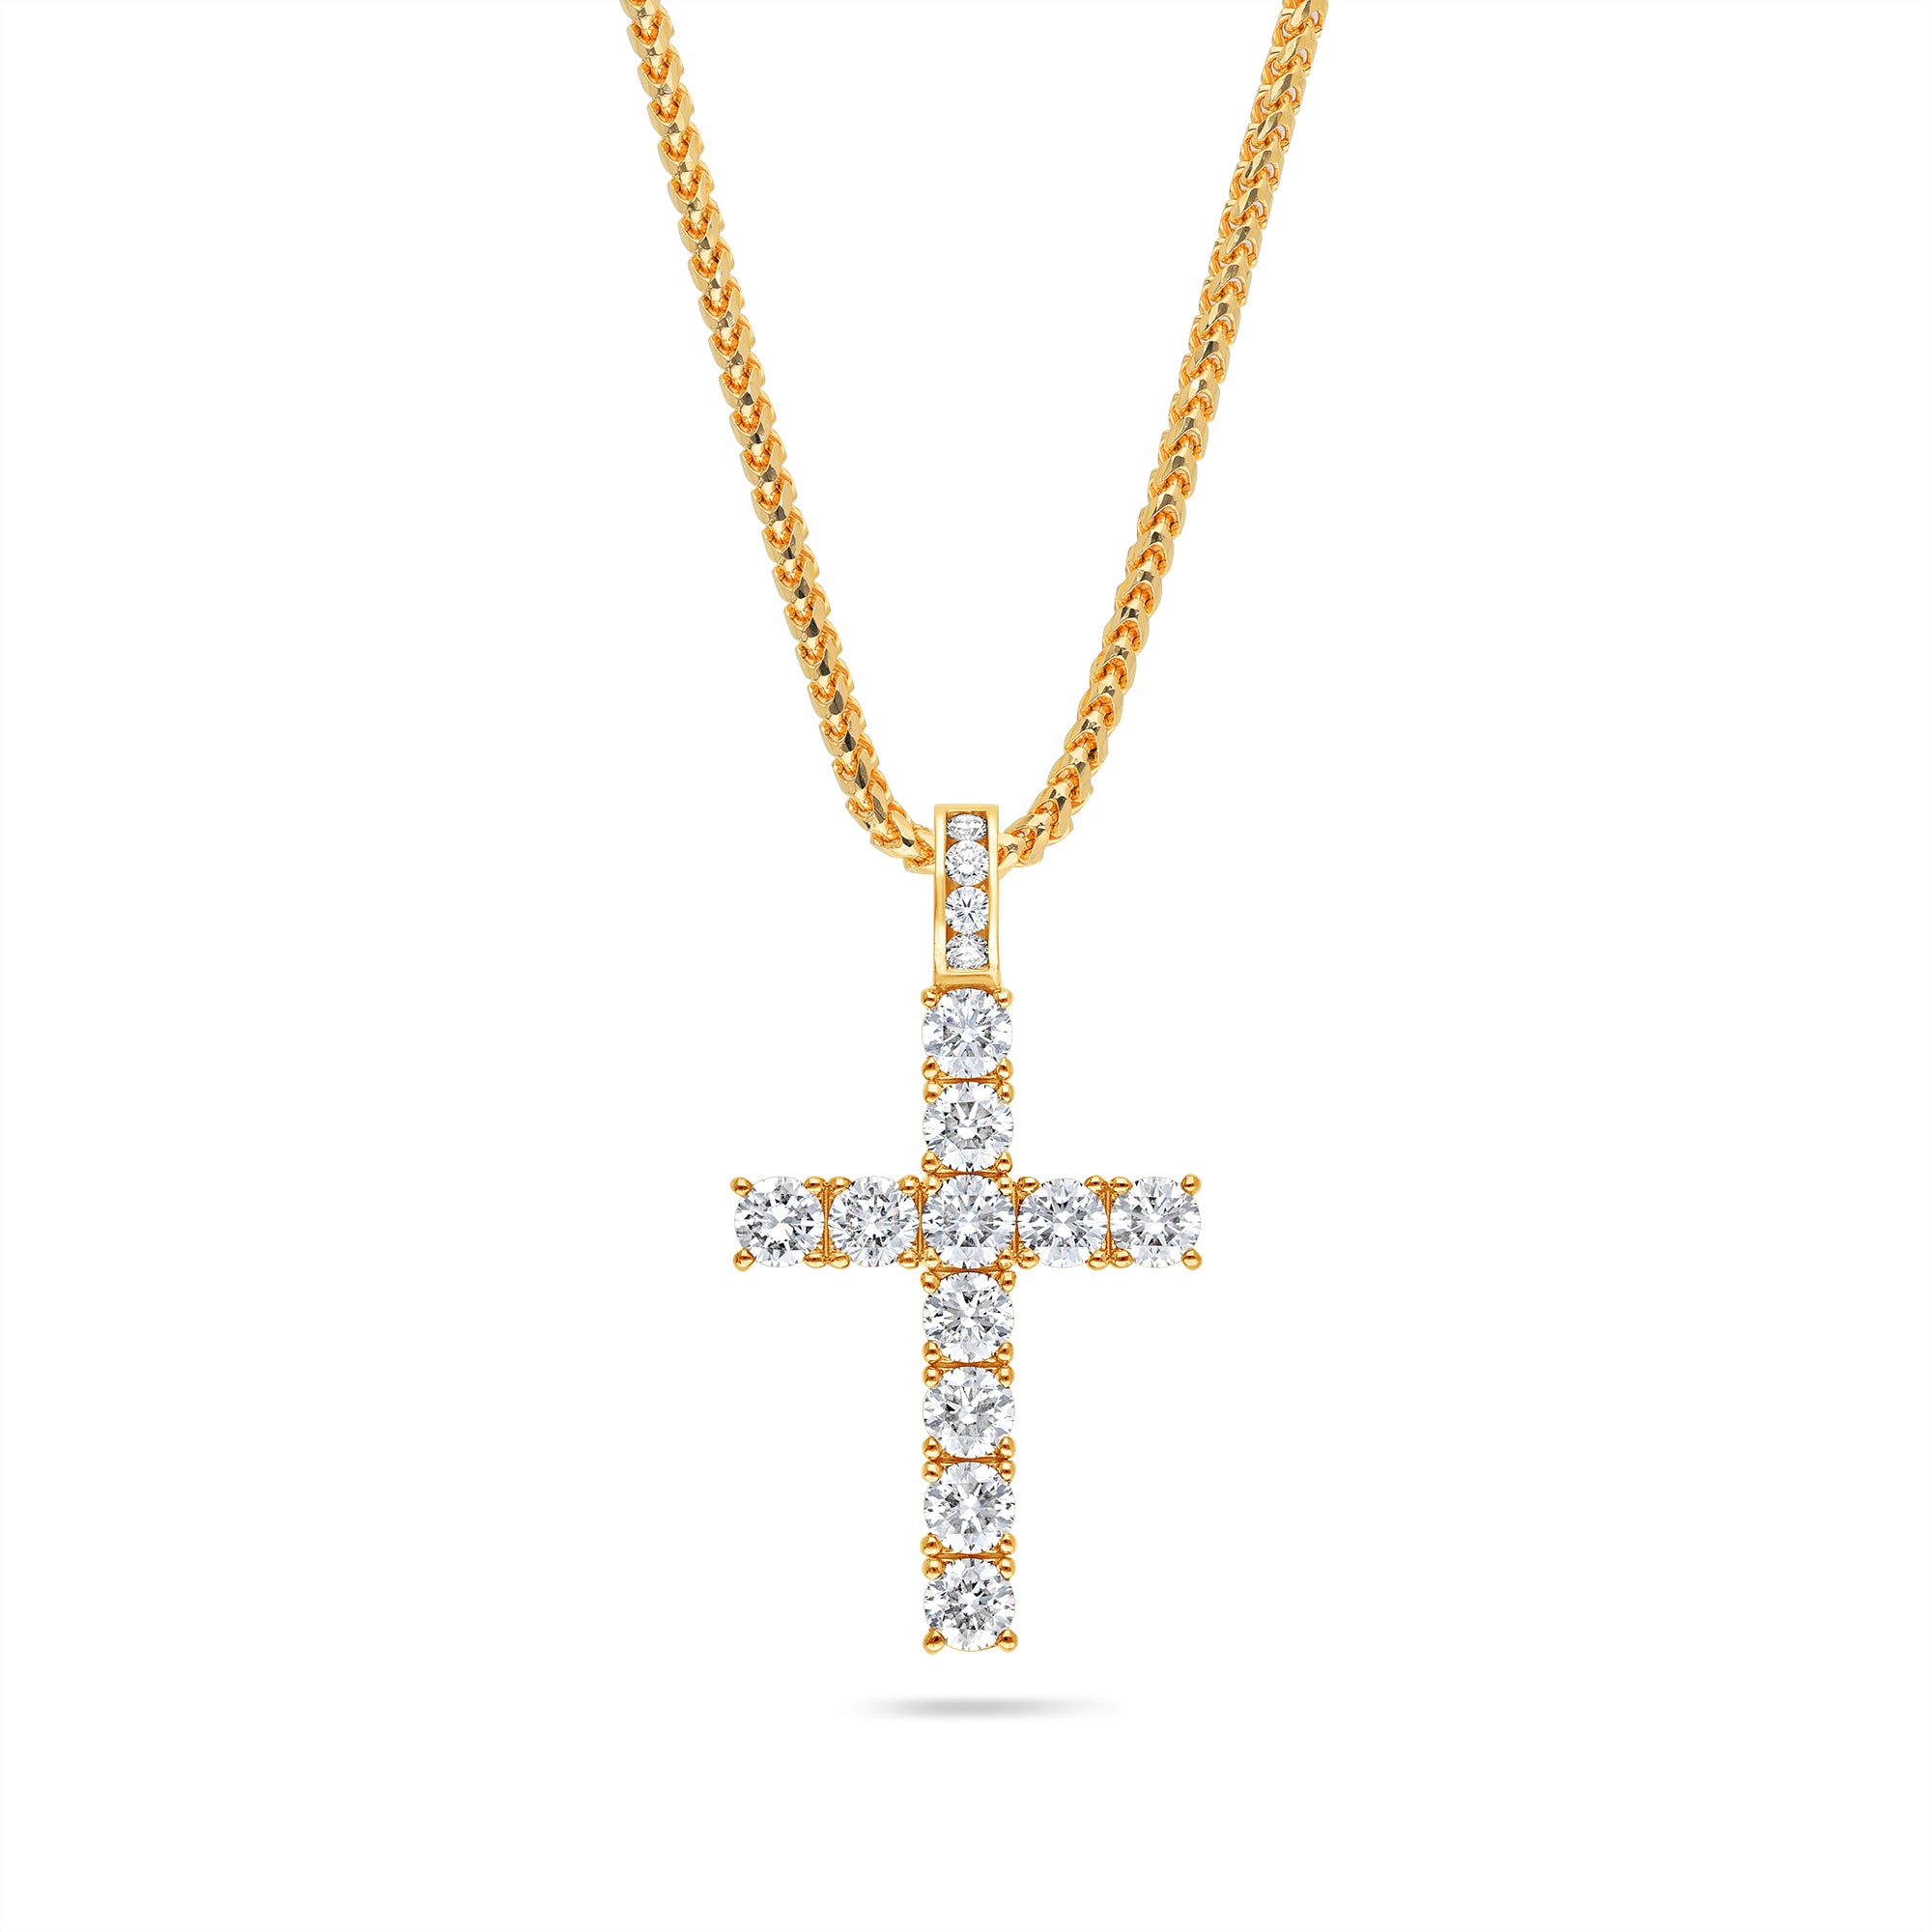 Cross Necklaces - Fine Gold & Diamond Jewelry | Joseph's Jewelry